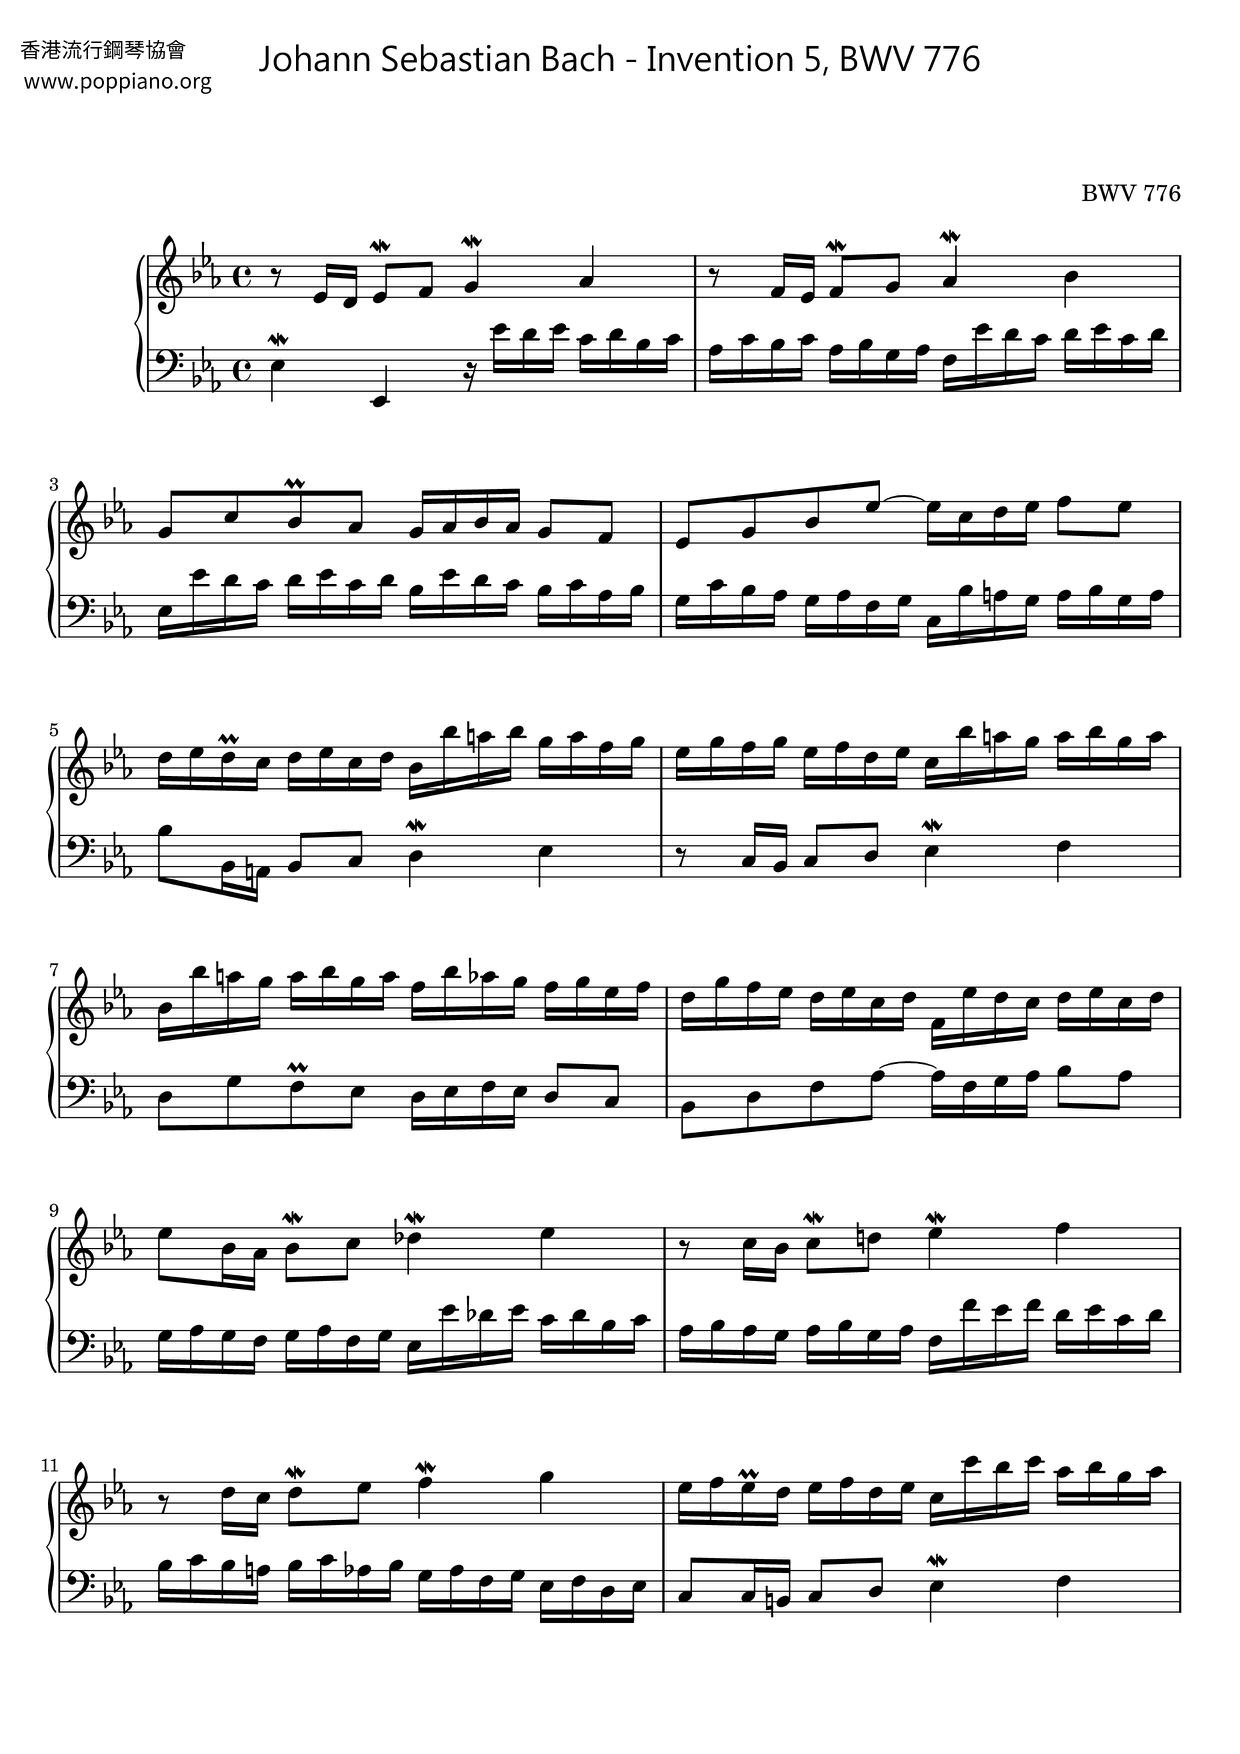 Invention 5, BWV 776 Score